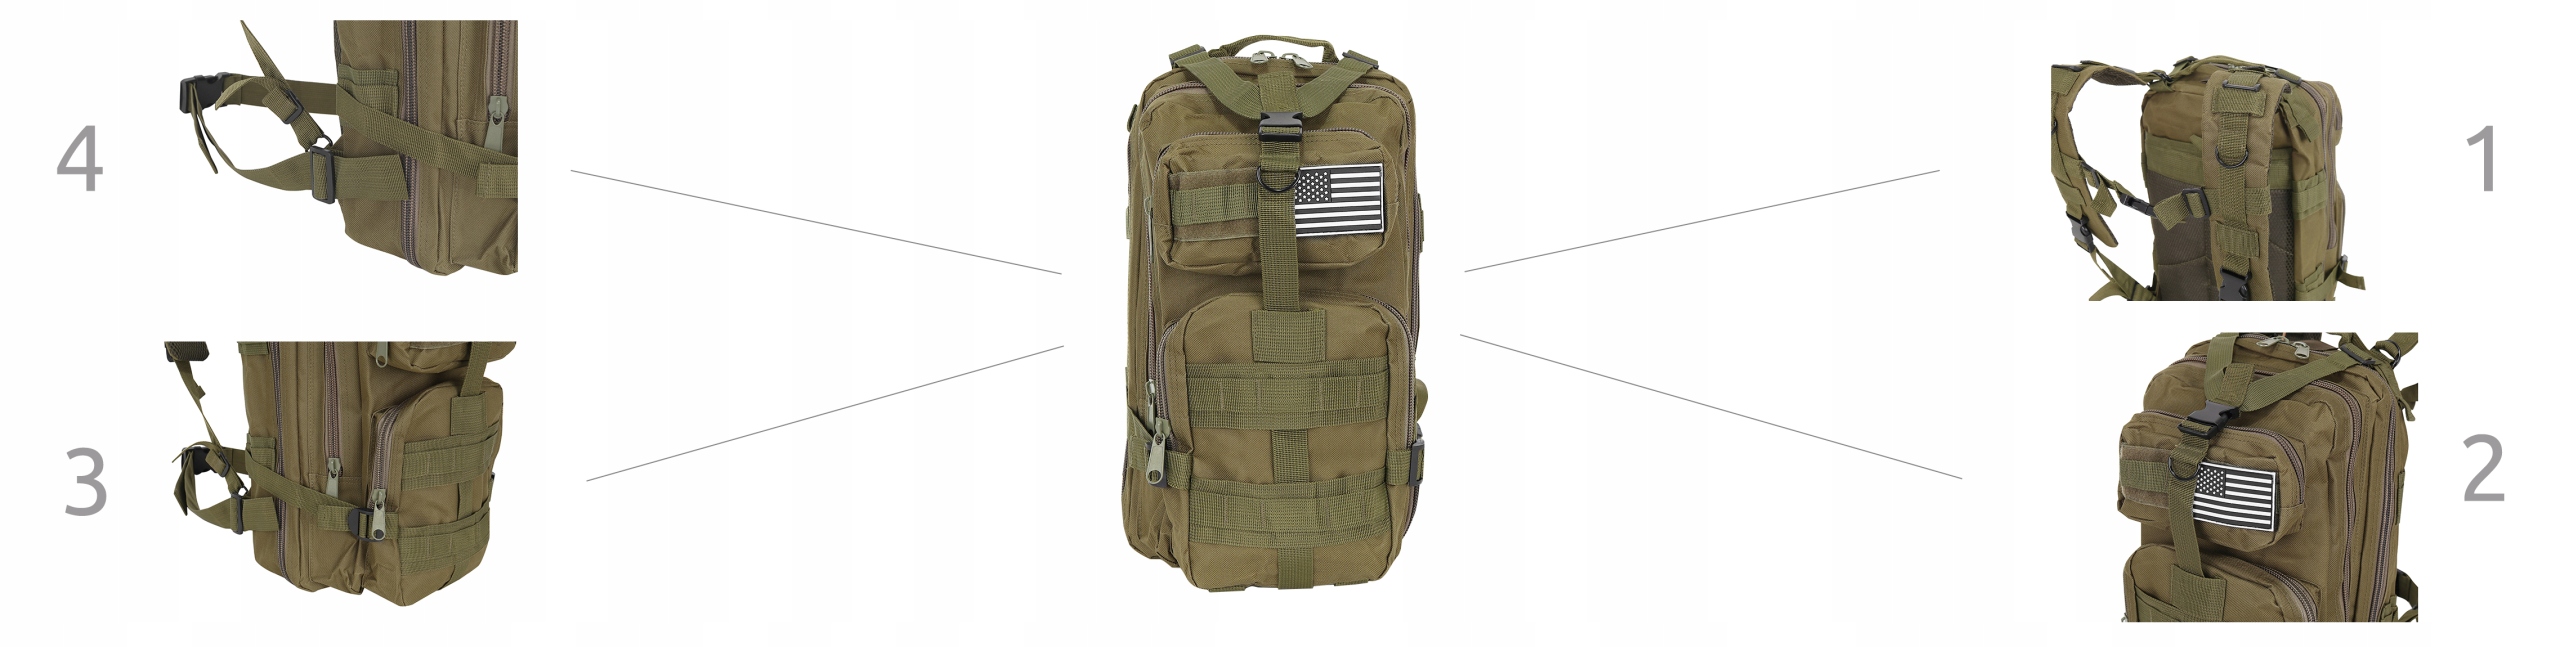 Military Tactical Military Survival Backpack 30l Z Název barvy výrobce Green Khaki